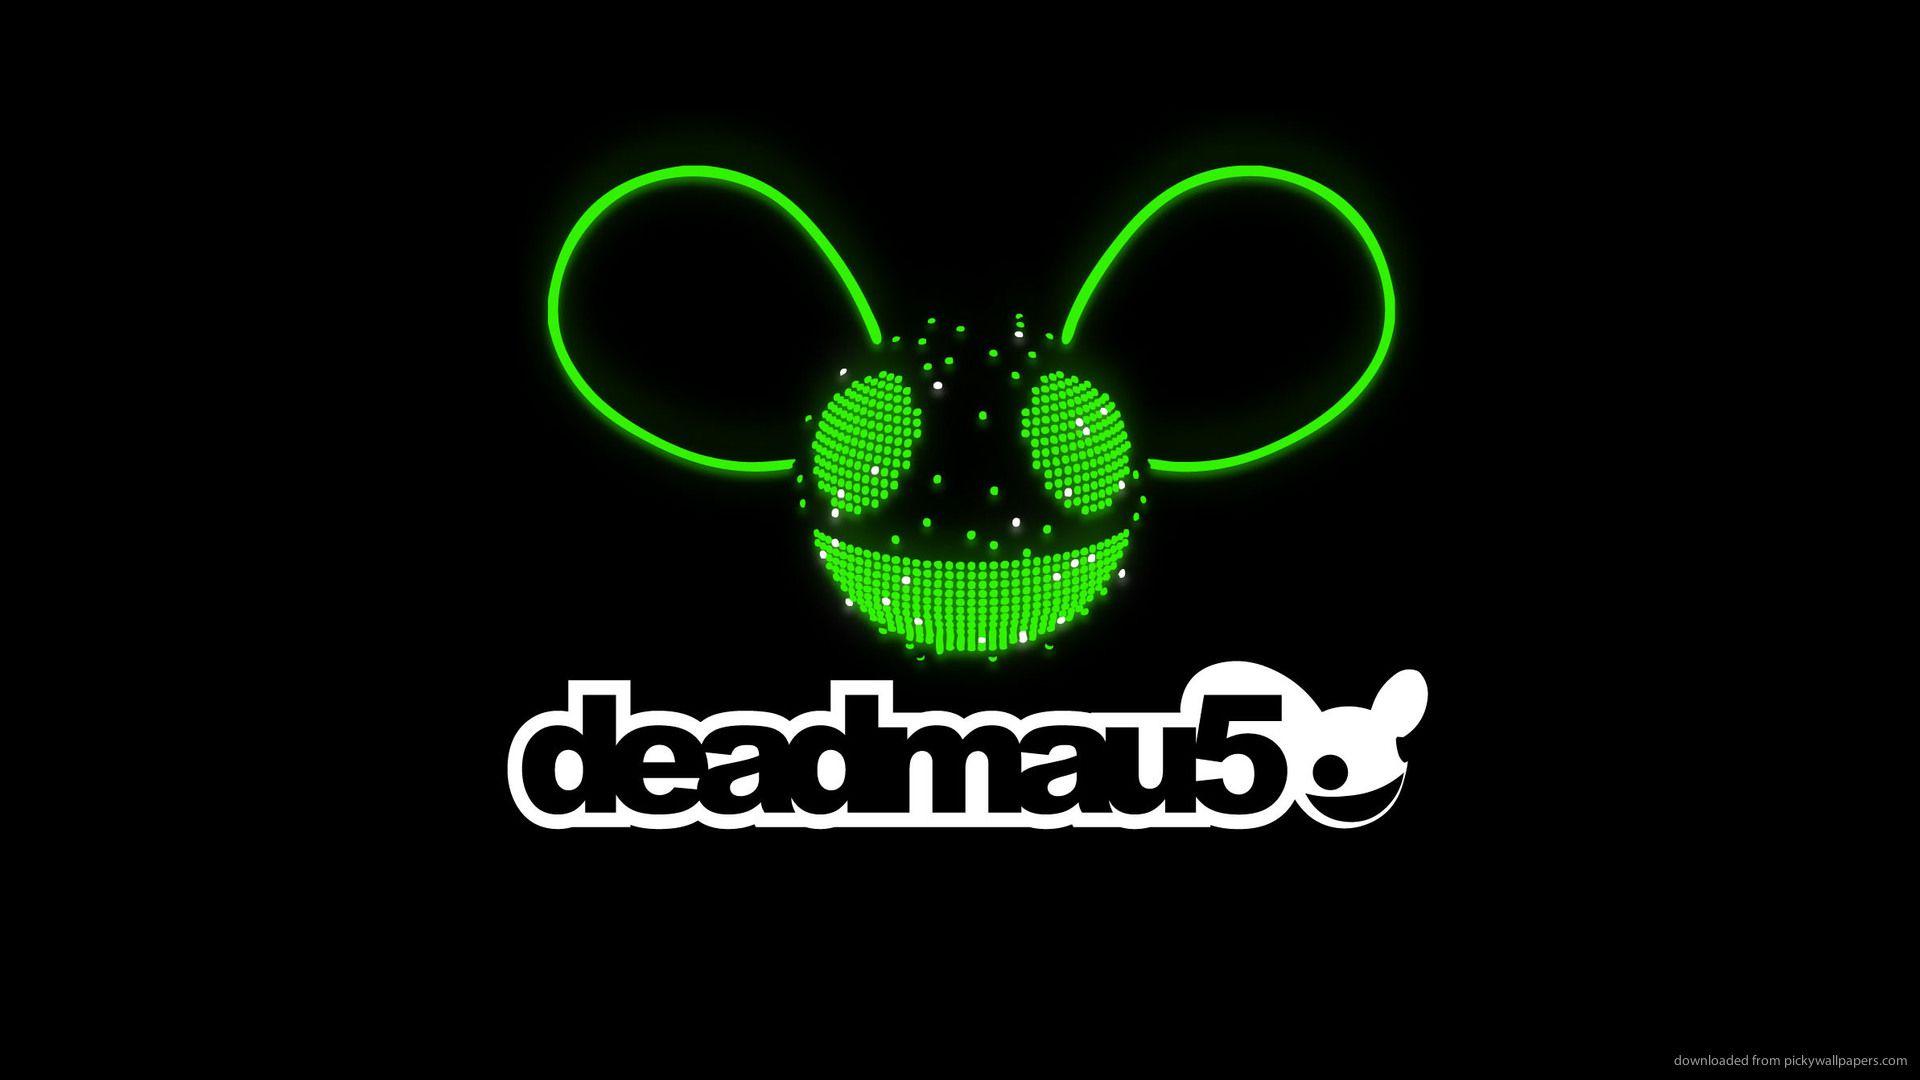 Deadmau5 Logo - Deadmau5 Logo HD Wallpaper, Background Images